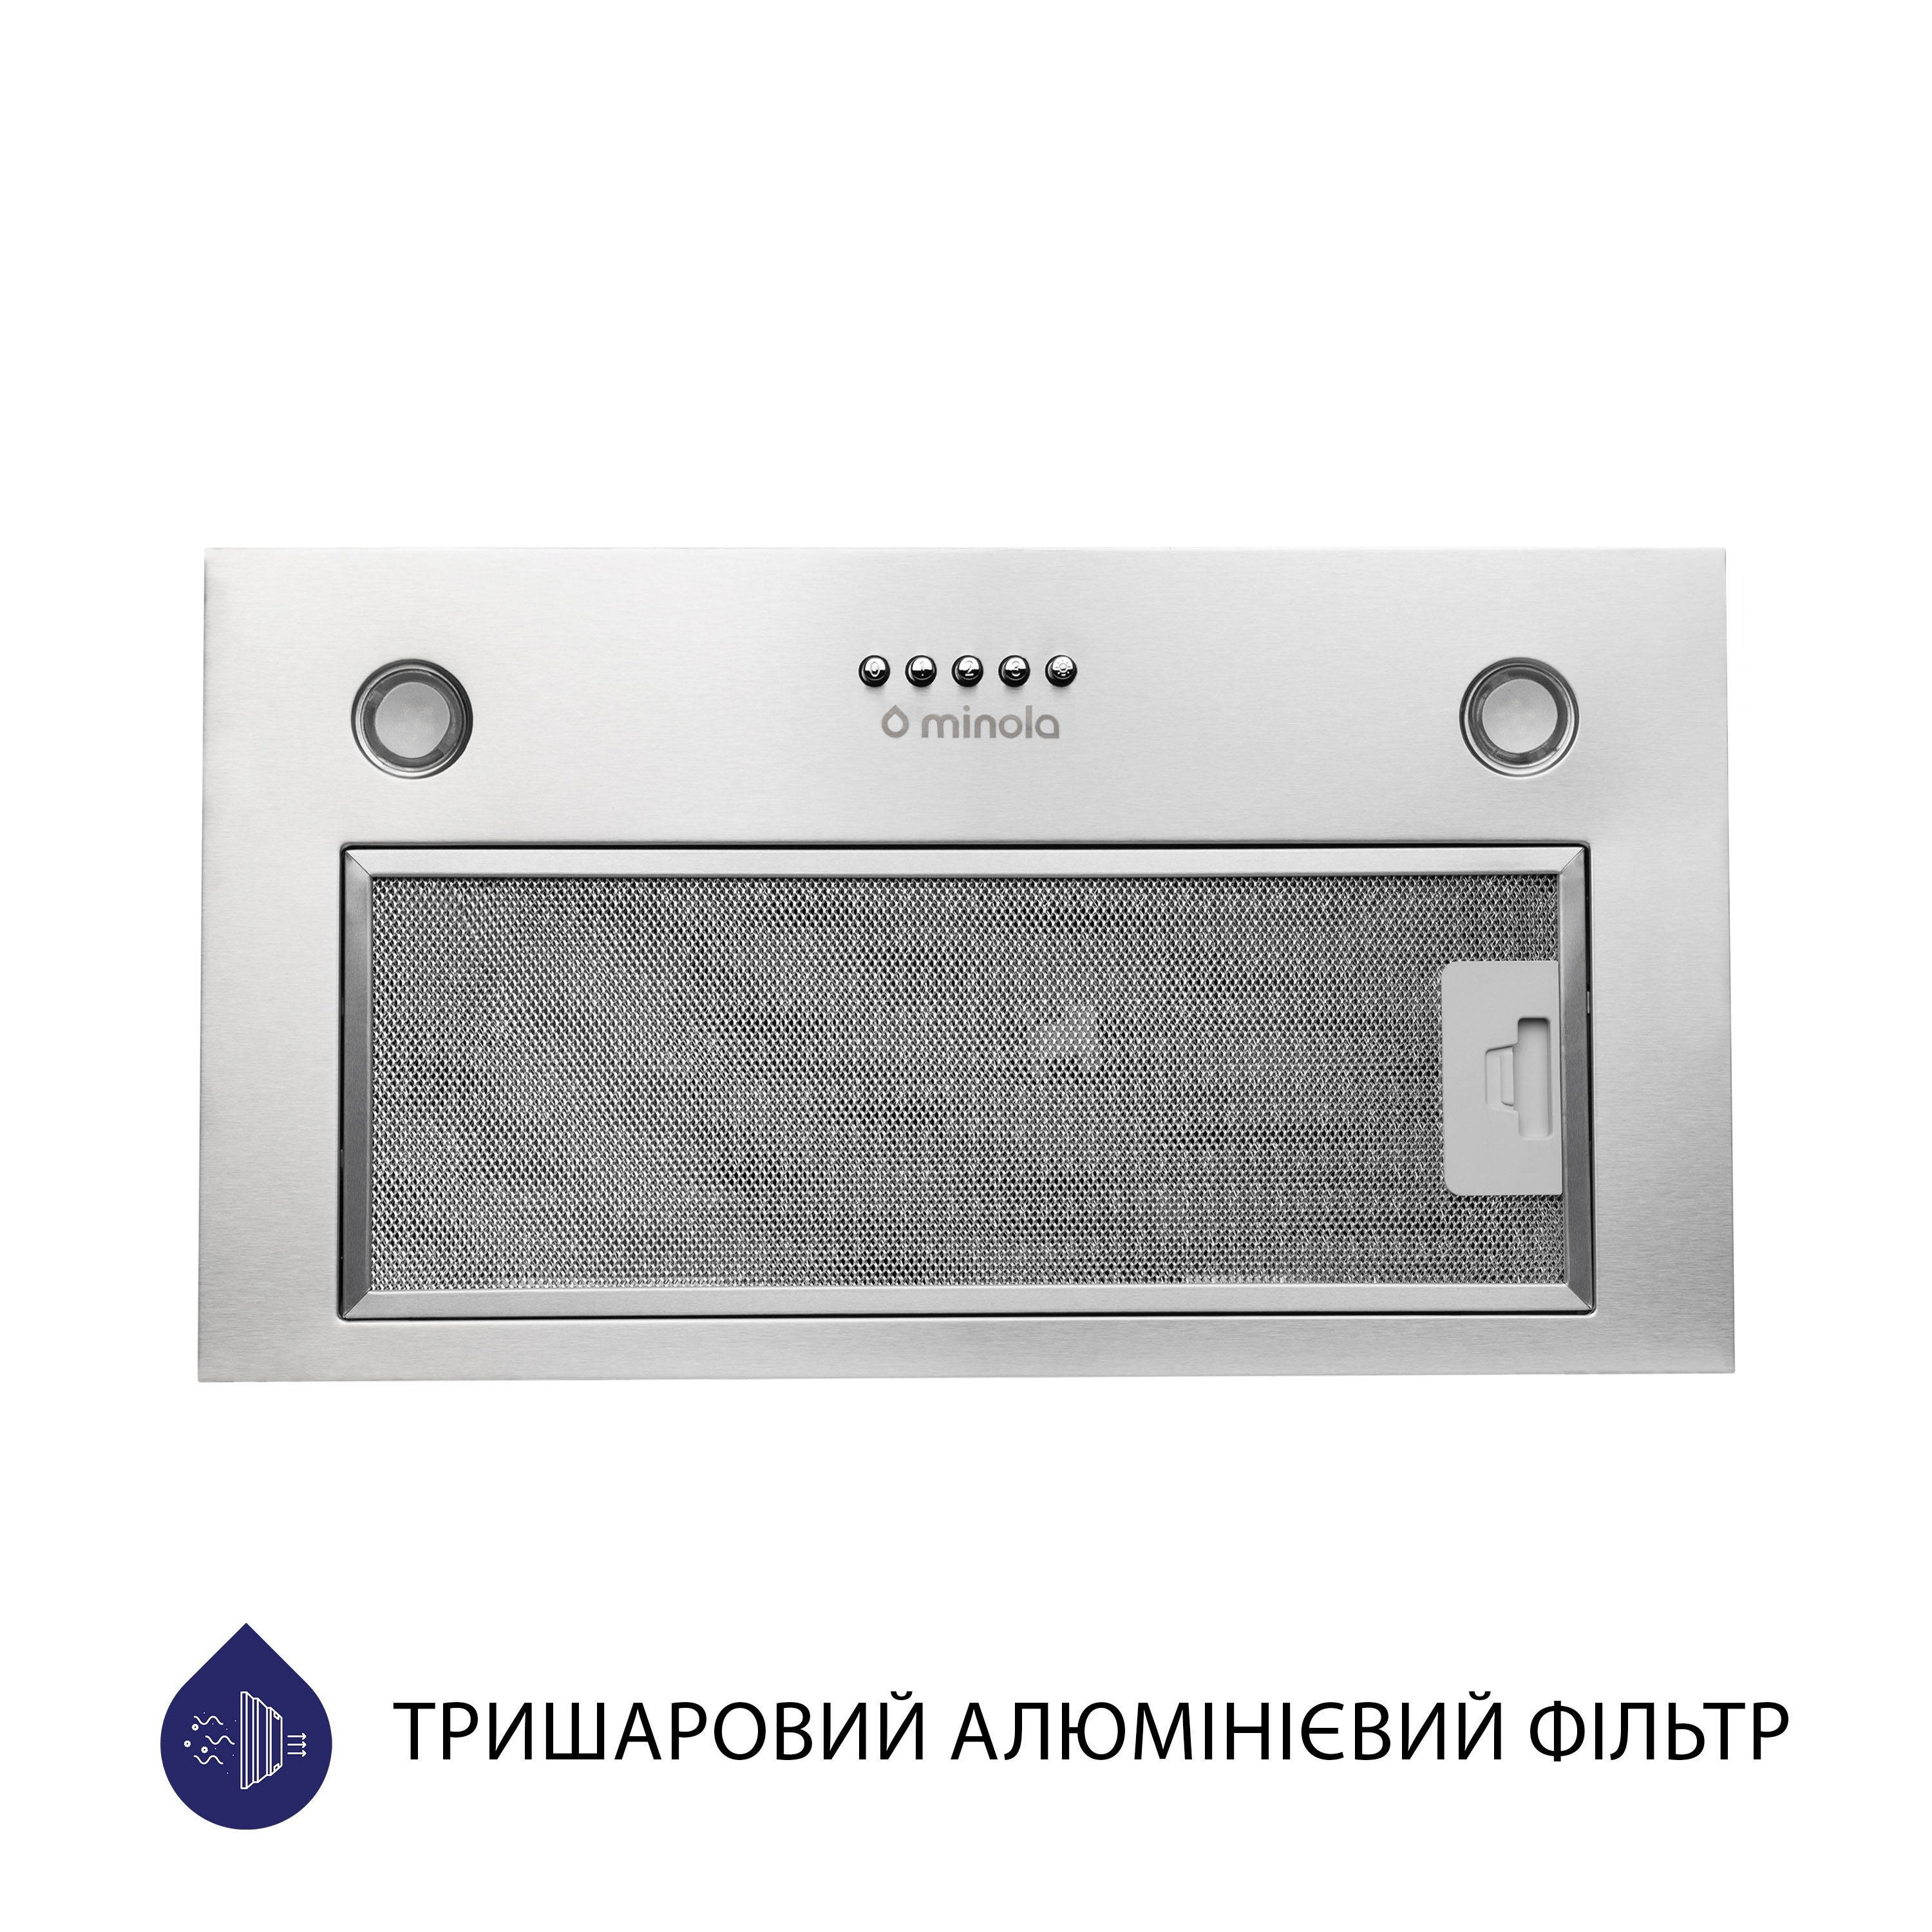 Витяжка кухонная полновстраиваемая Minola HBI 5327 I 800 LED цена 3279.00 грн - фотография 2